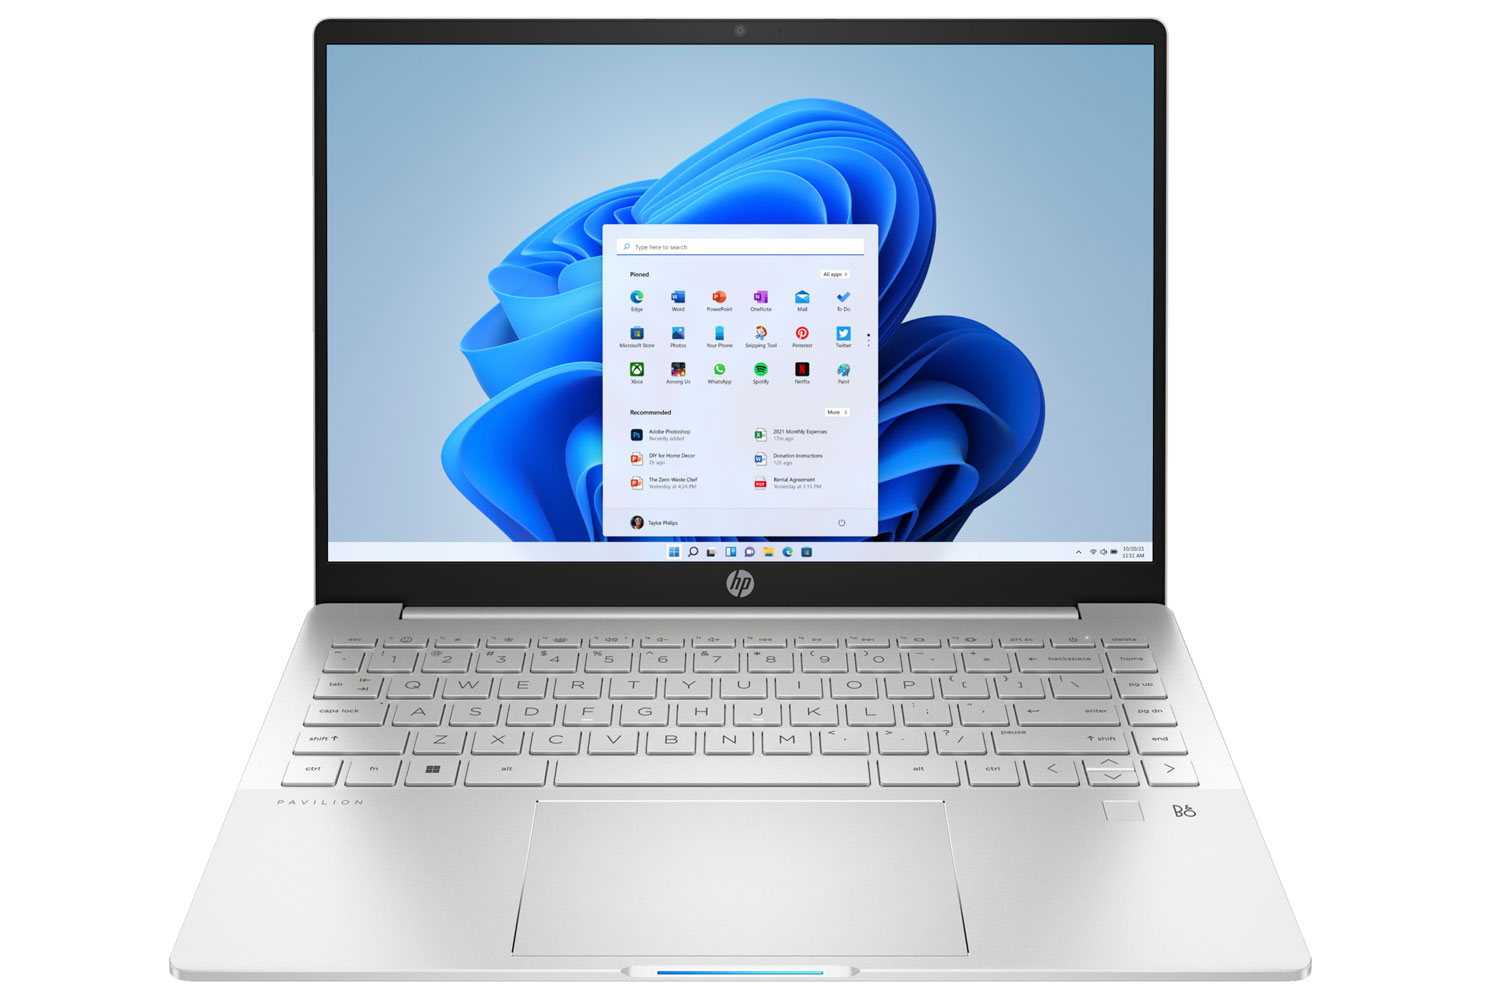 HP Envy против Pavilion: какая линейка ноутбуков лучше?